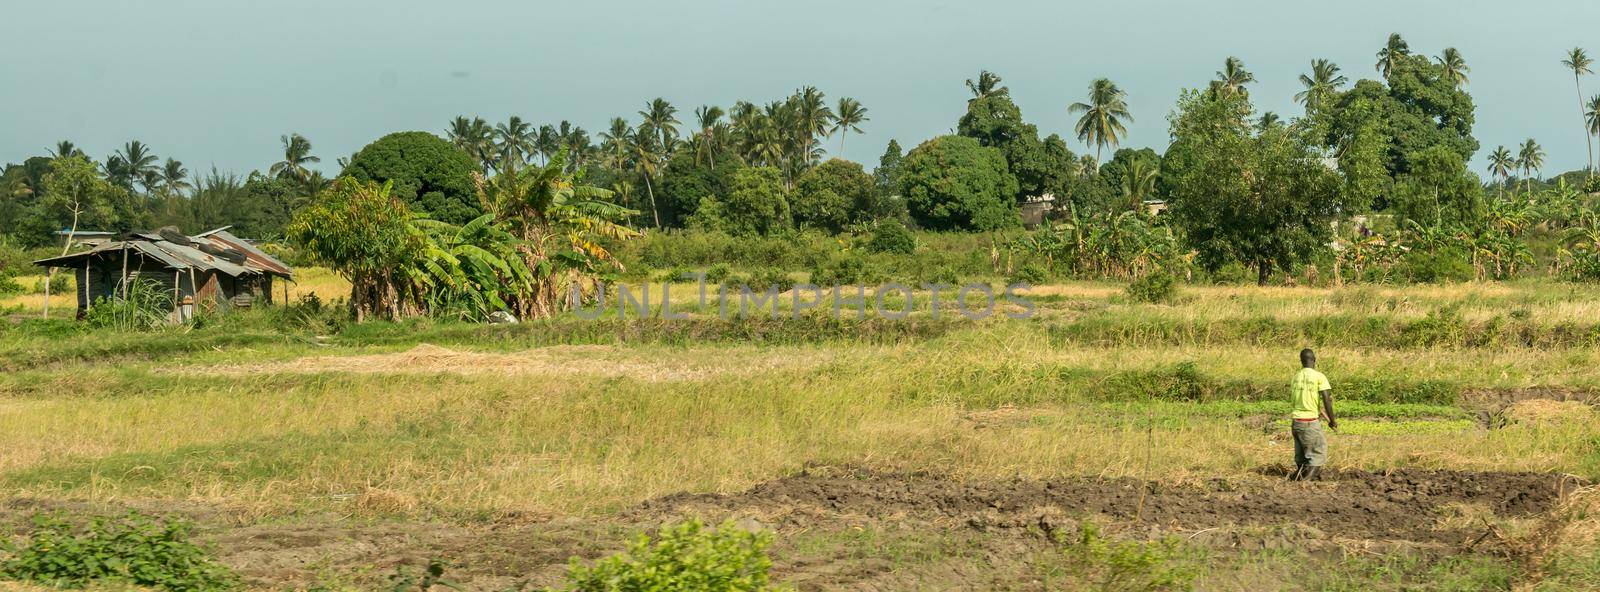 panoramic view of green field with man farming in Zanzibar, Africa